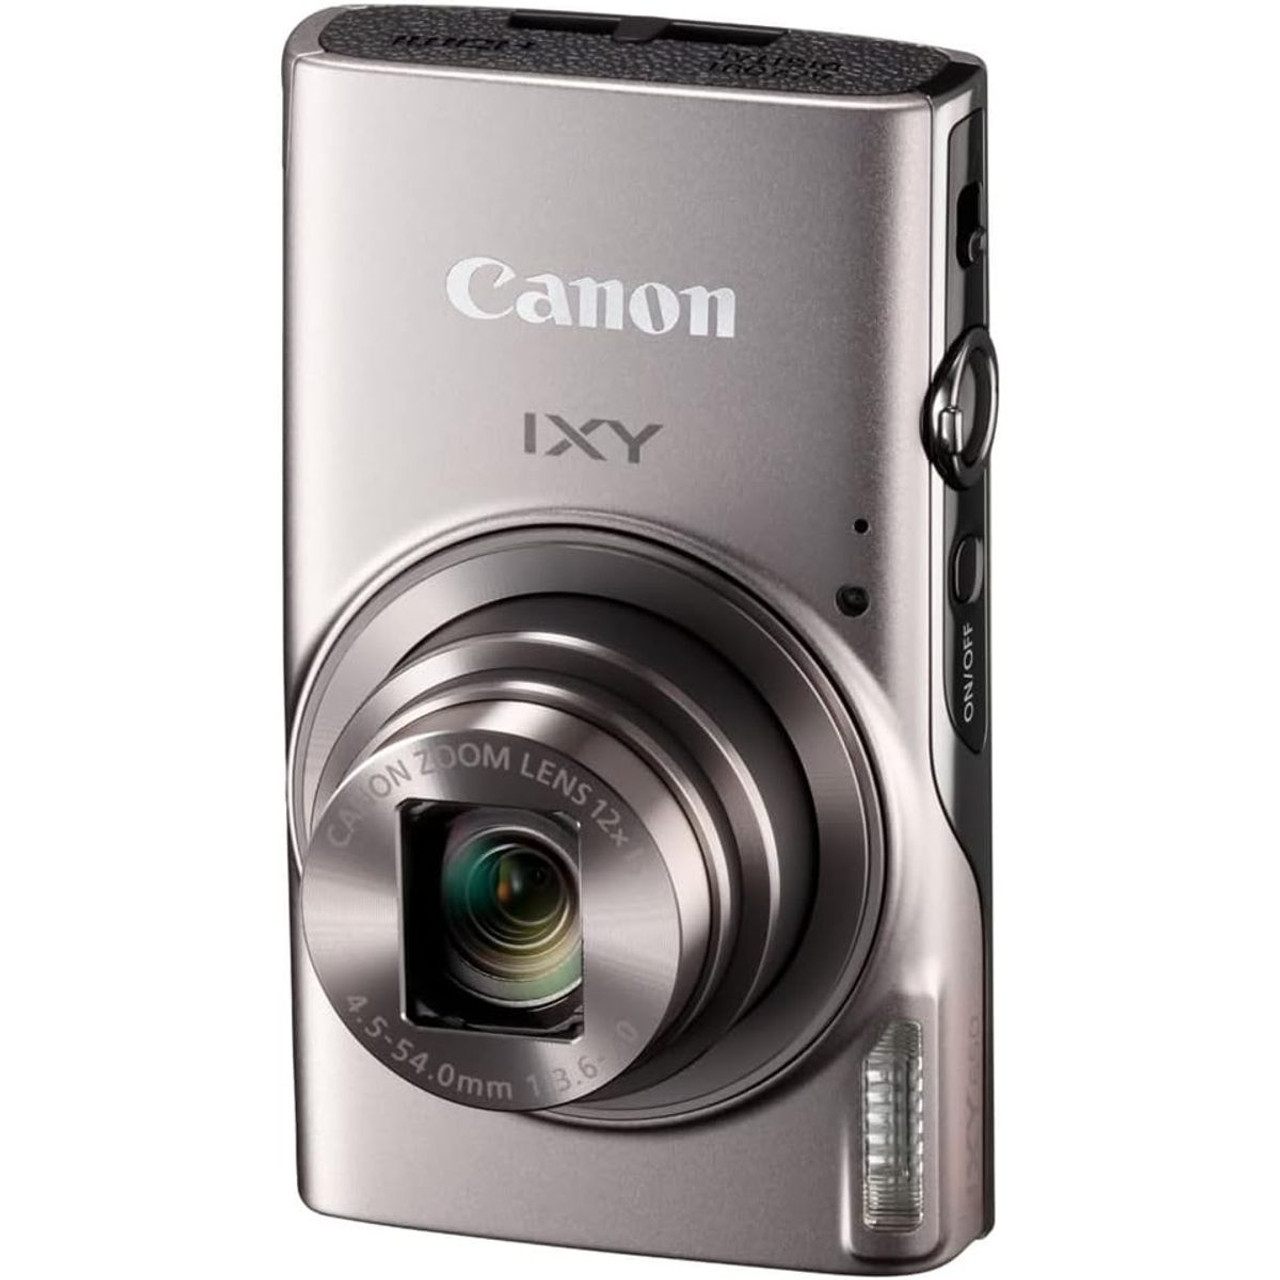 Canon Ixy 650 Digital Camera product image